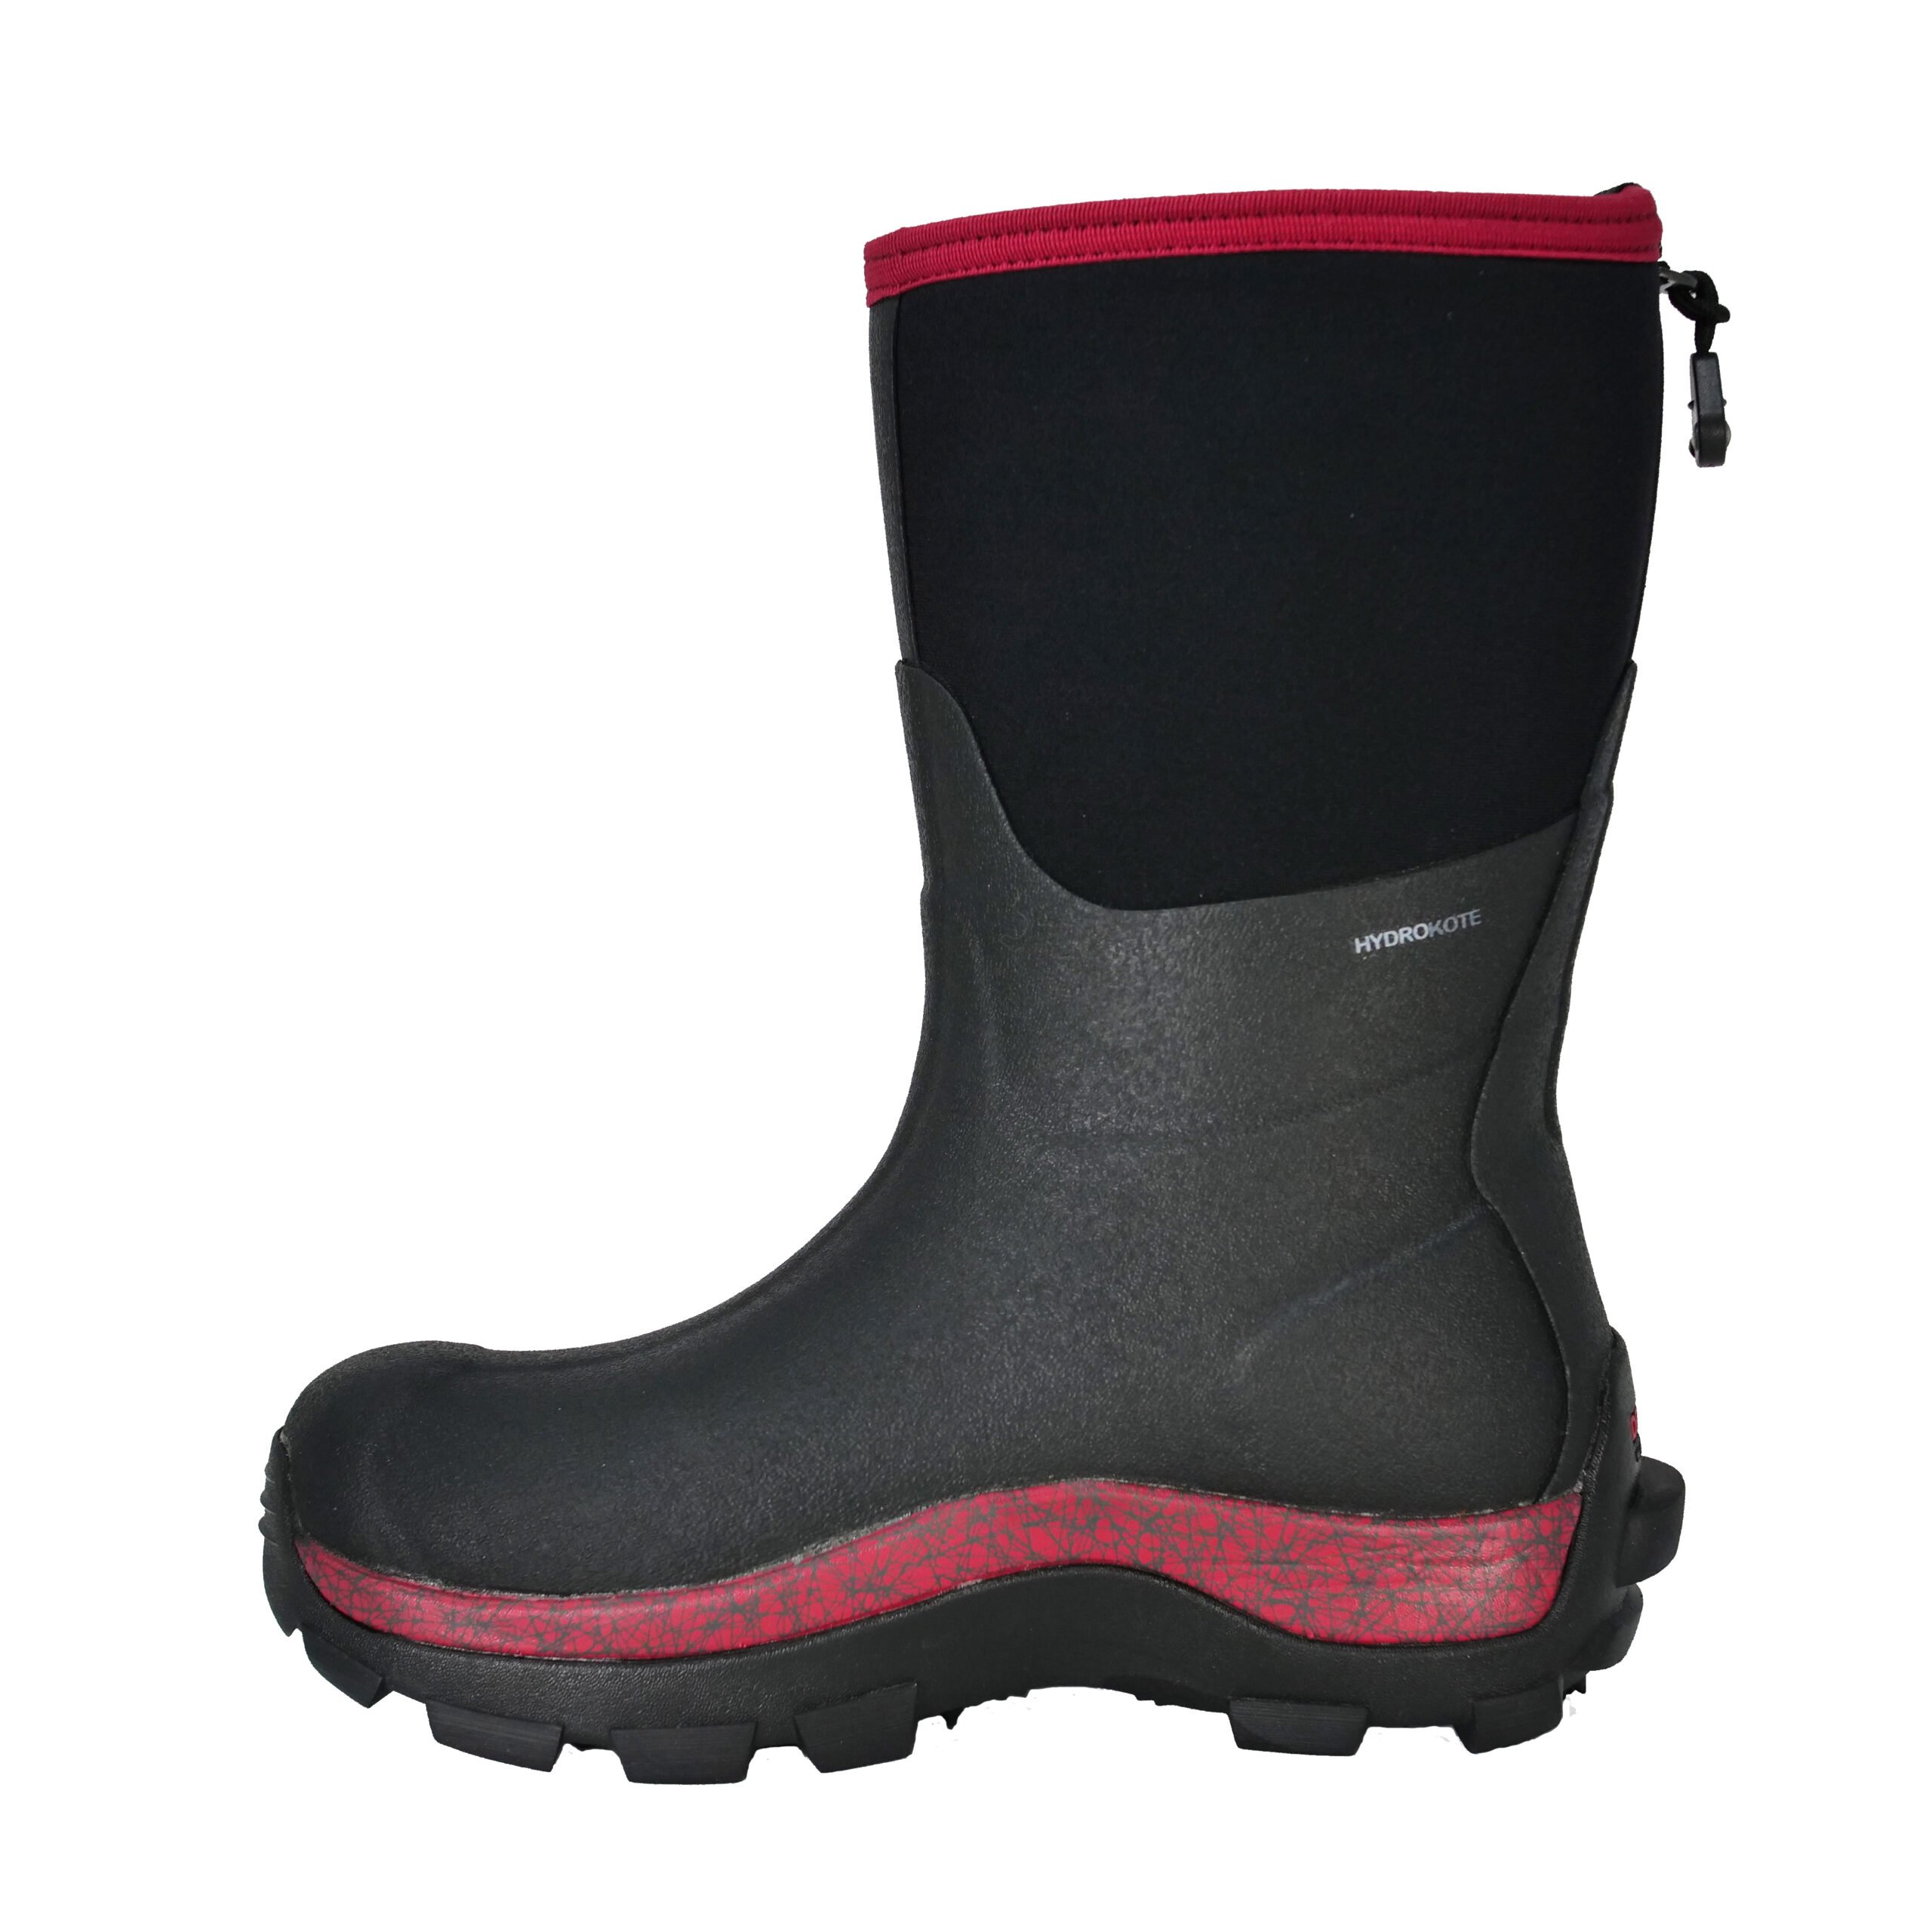 Anyone Bible fluent Arctic Storm Women's Mid Cranberry – Dryshod Waterproof Boots